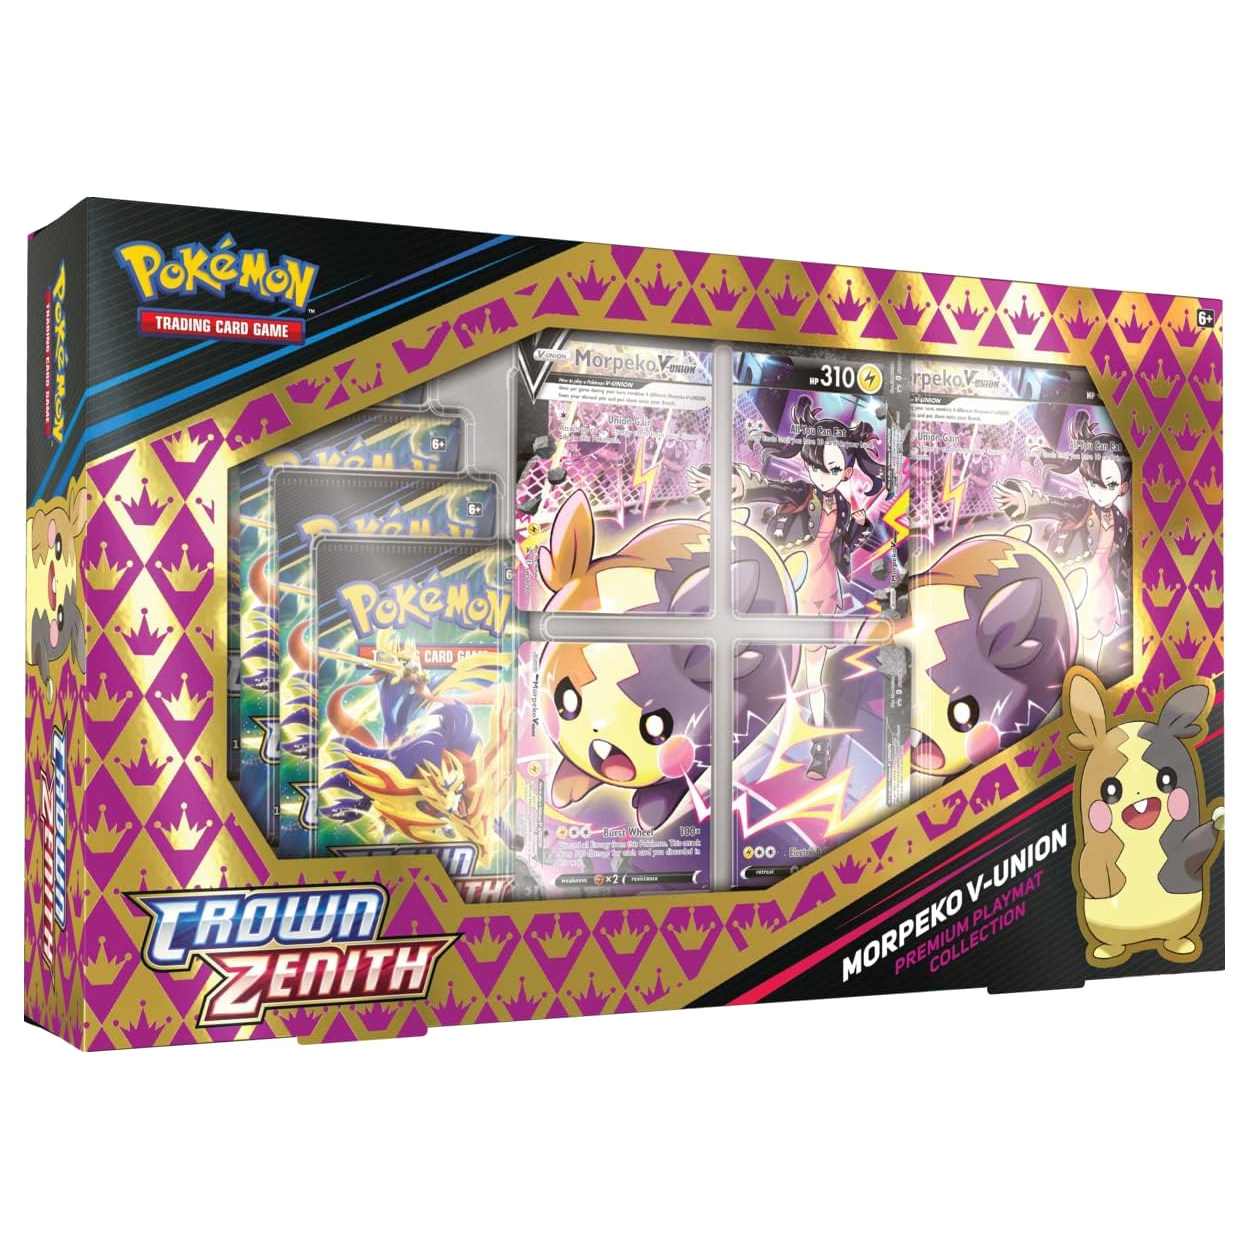 Pokemon TCG: Crown Zenith Premium Playmat Collection Morpeko V-Union Box